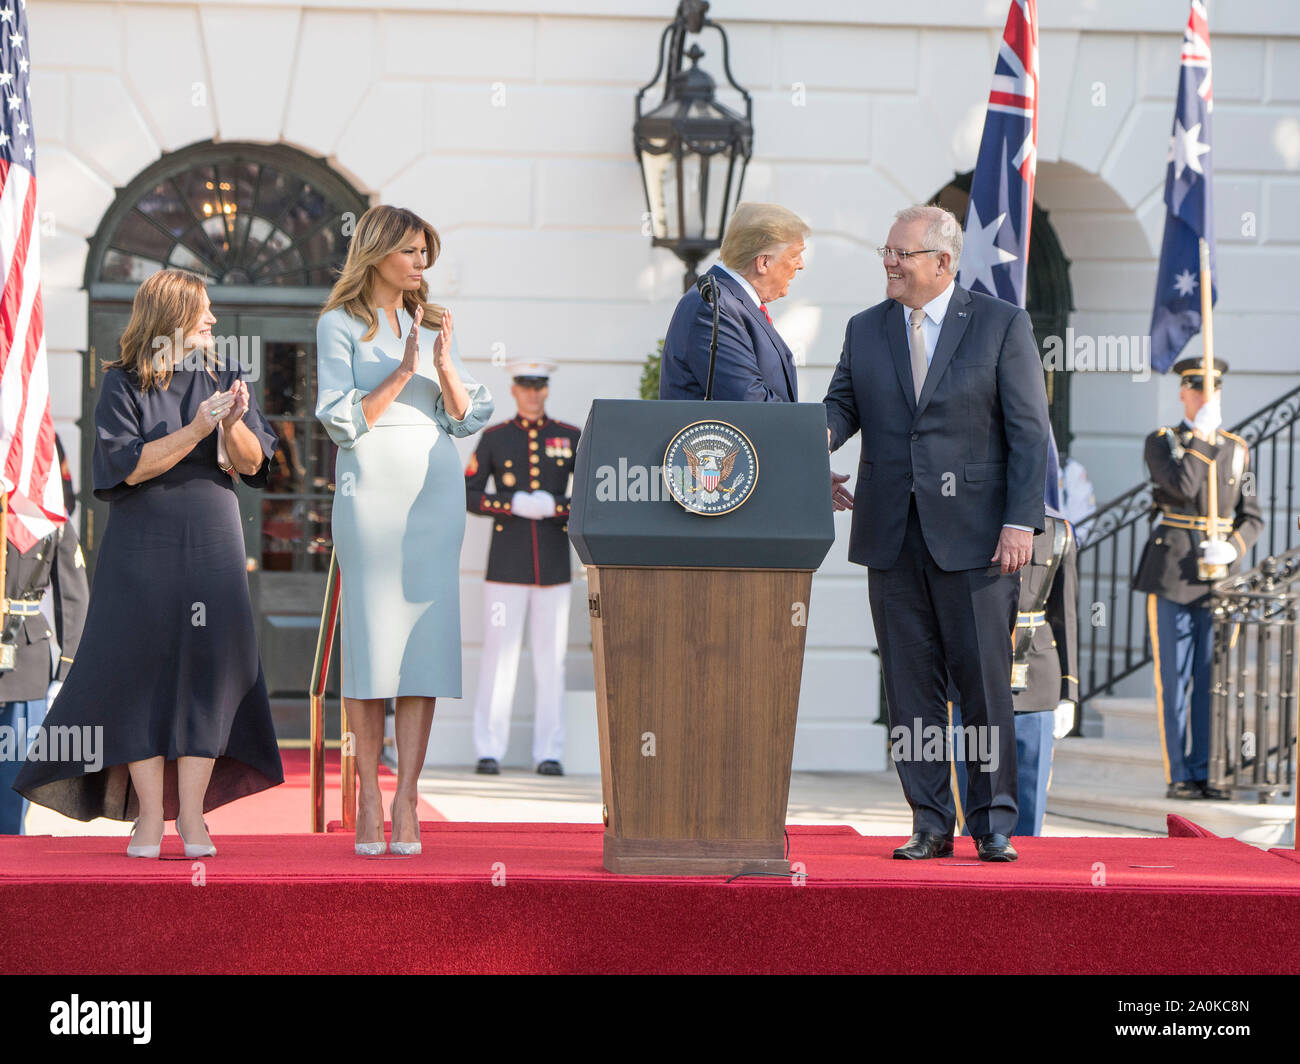 President Donald J Trump welcomes Australian Prime Minister Scott Morrison and his wife, Jennifer, to the White House in Washington DC. Stock Photo